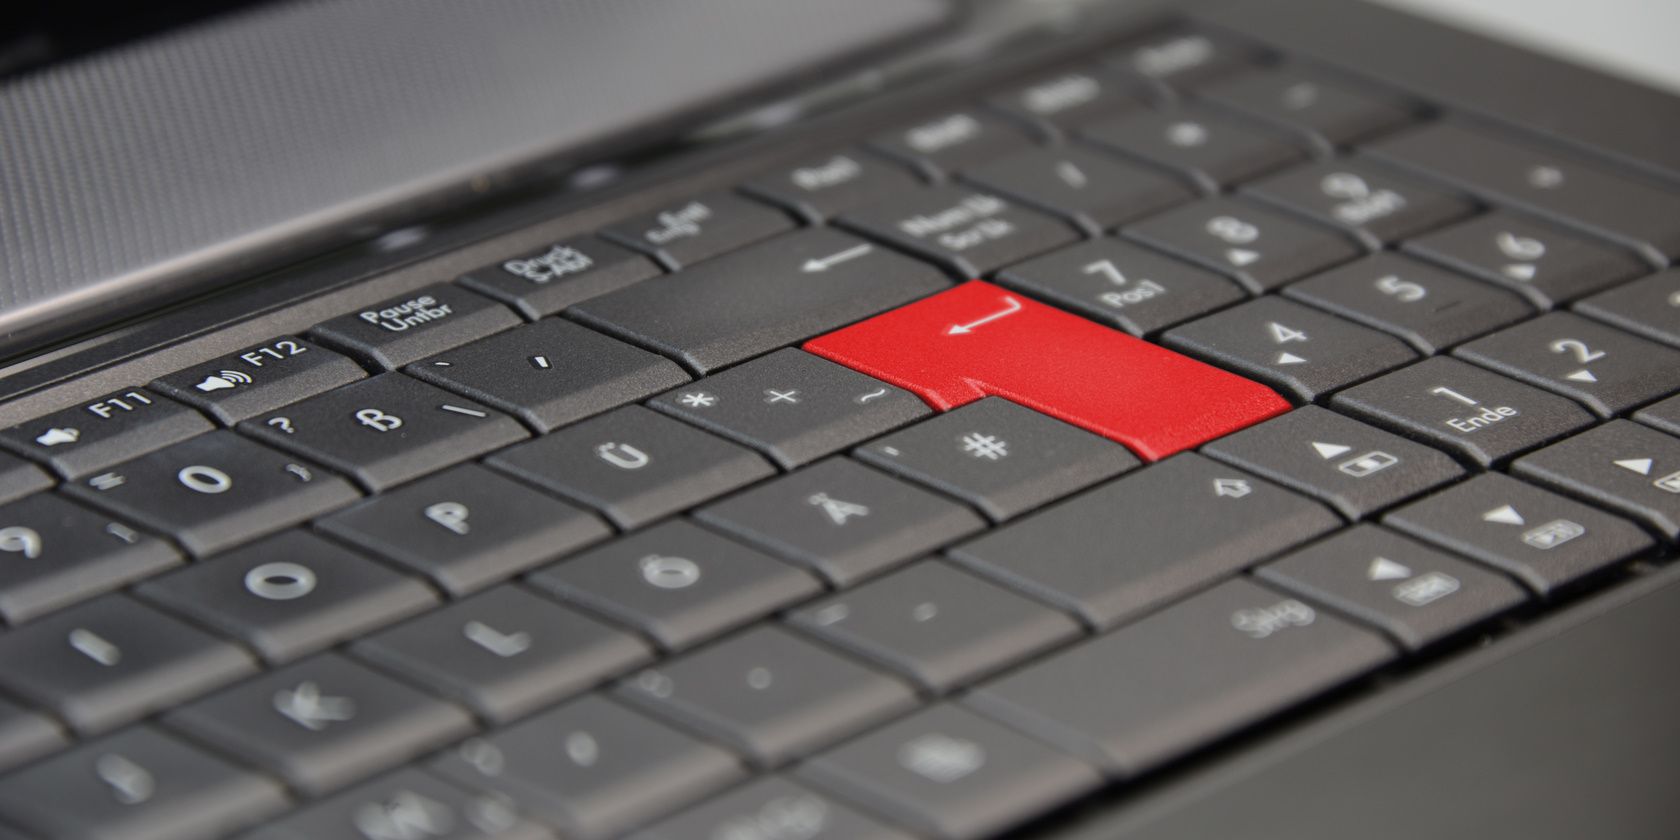 Enter Key on Laptop Keyboard in Red